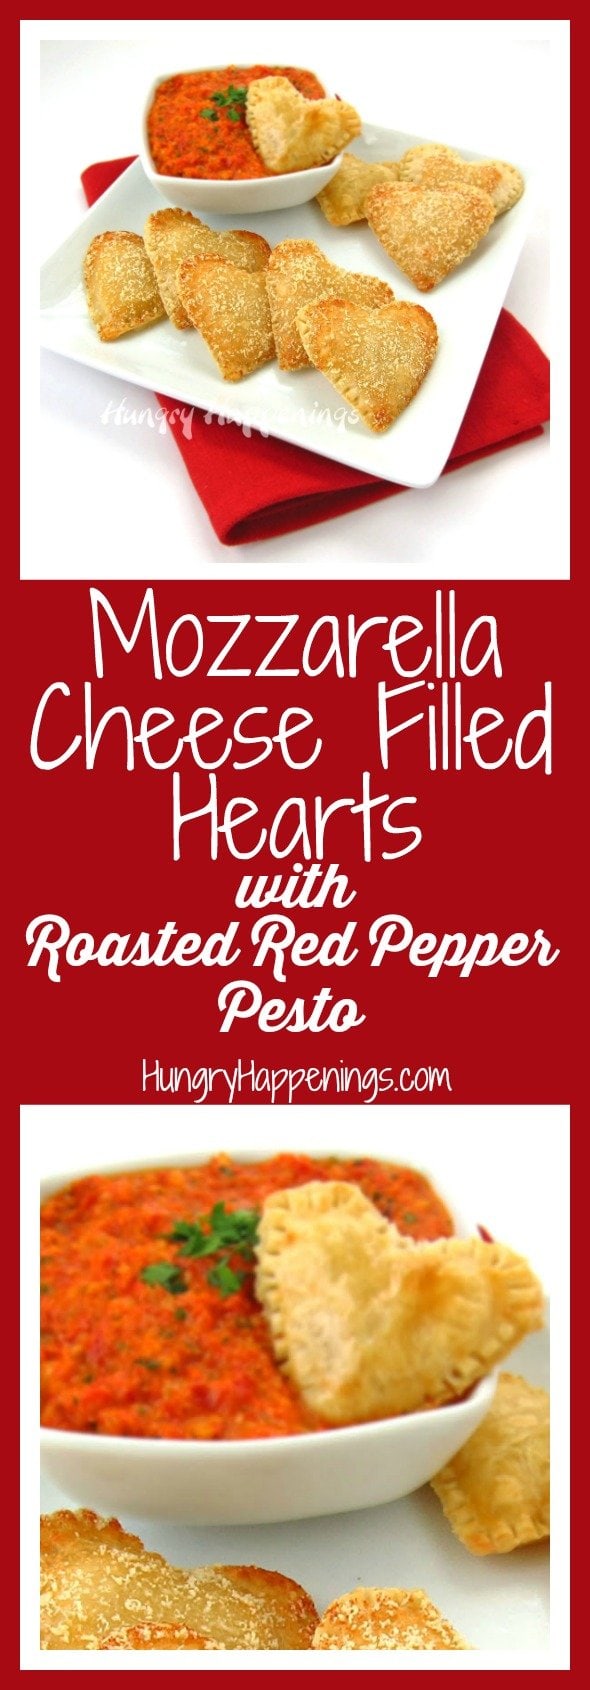 mozzarella cheese filled hearts